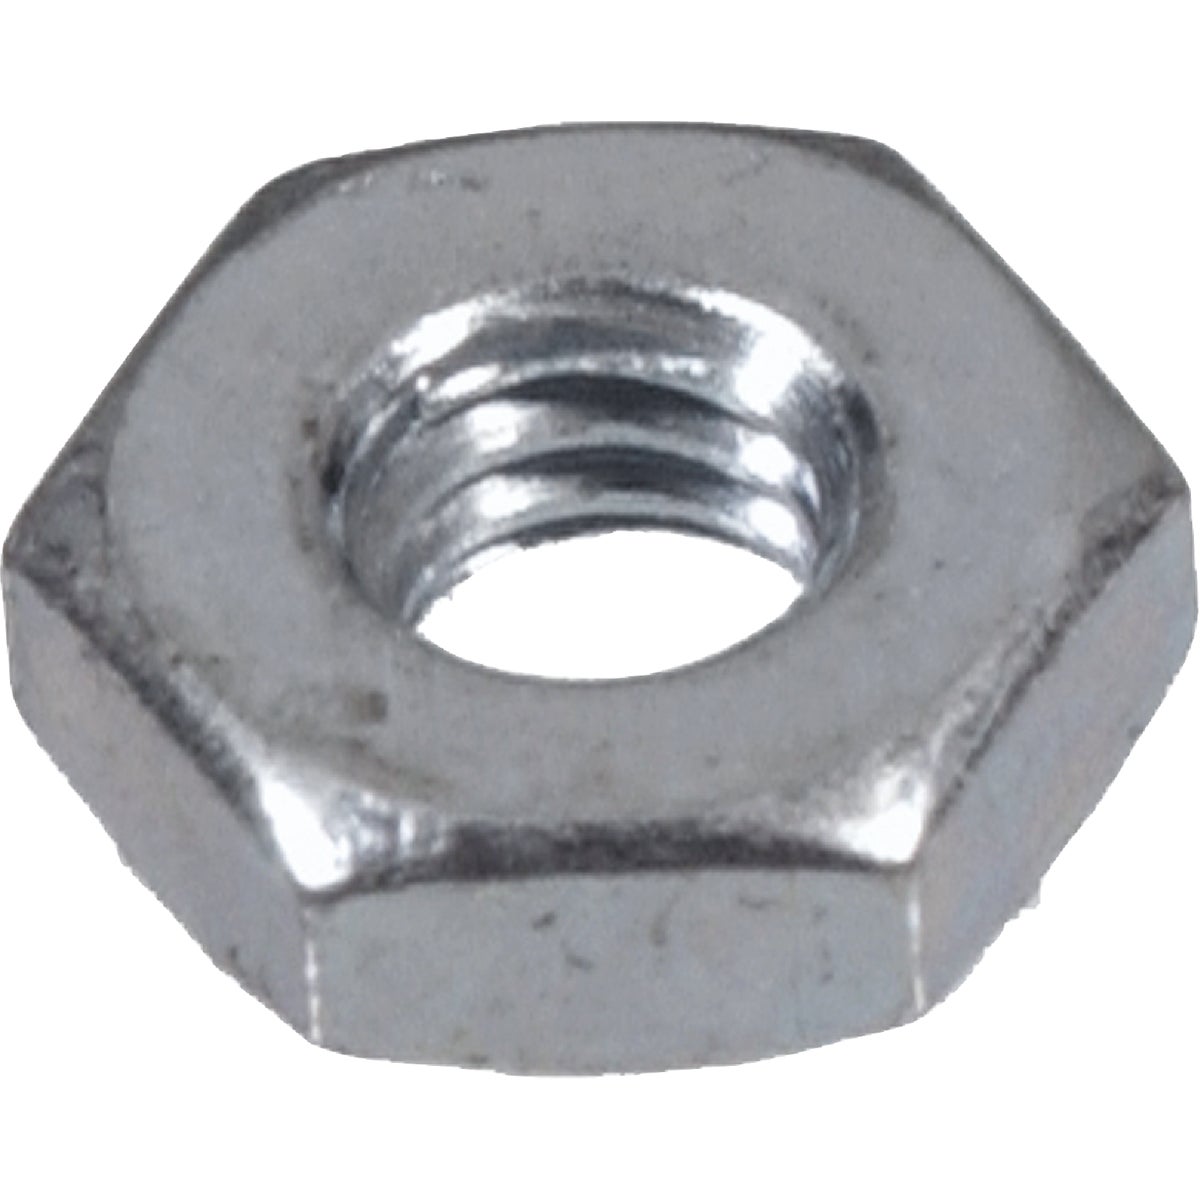 Hillman #10 24 tpi Low-Carbon Steel Hex Machine Screw Nut (20 Ct.)